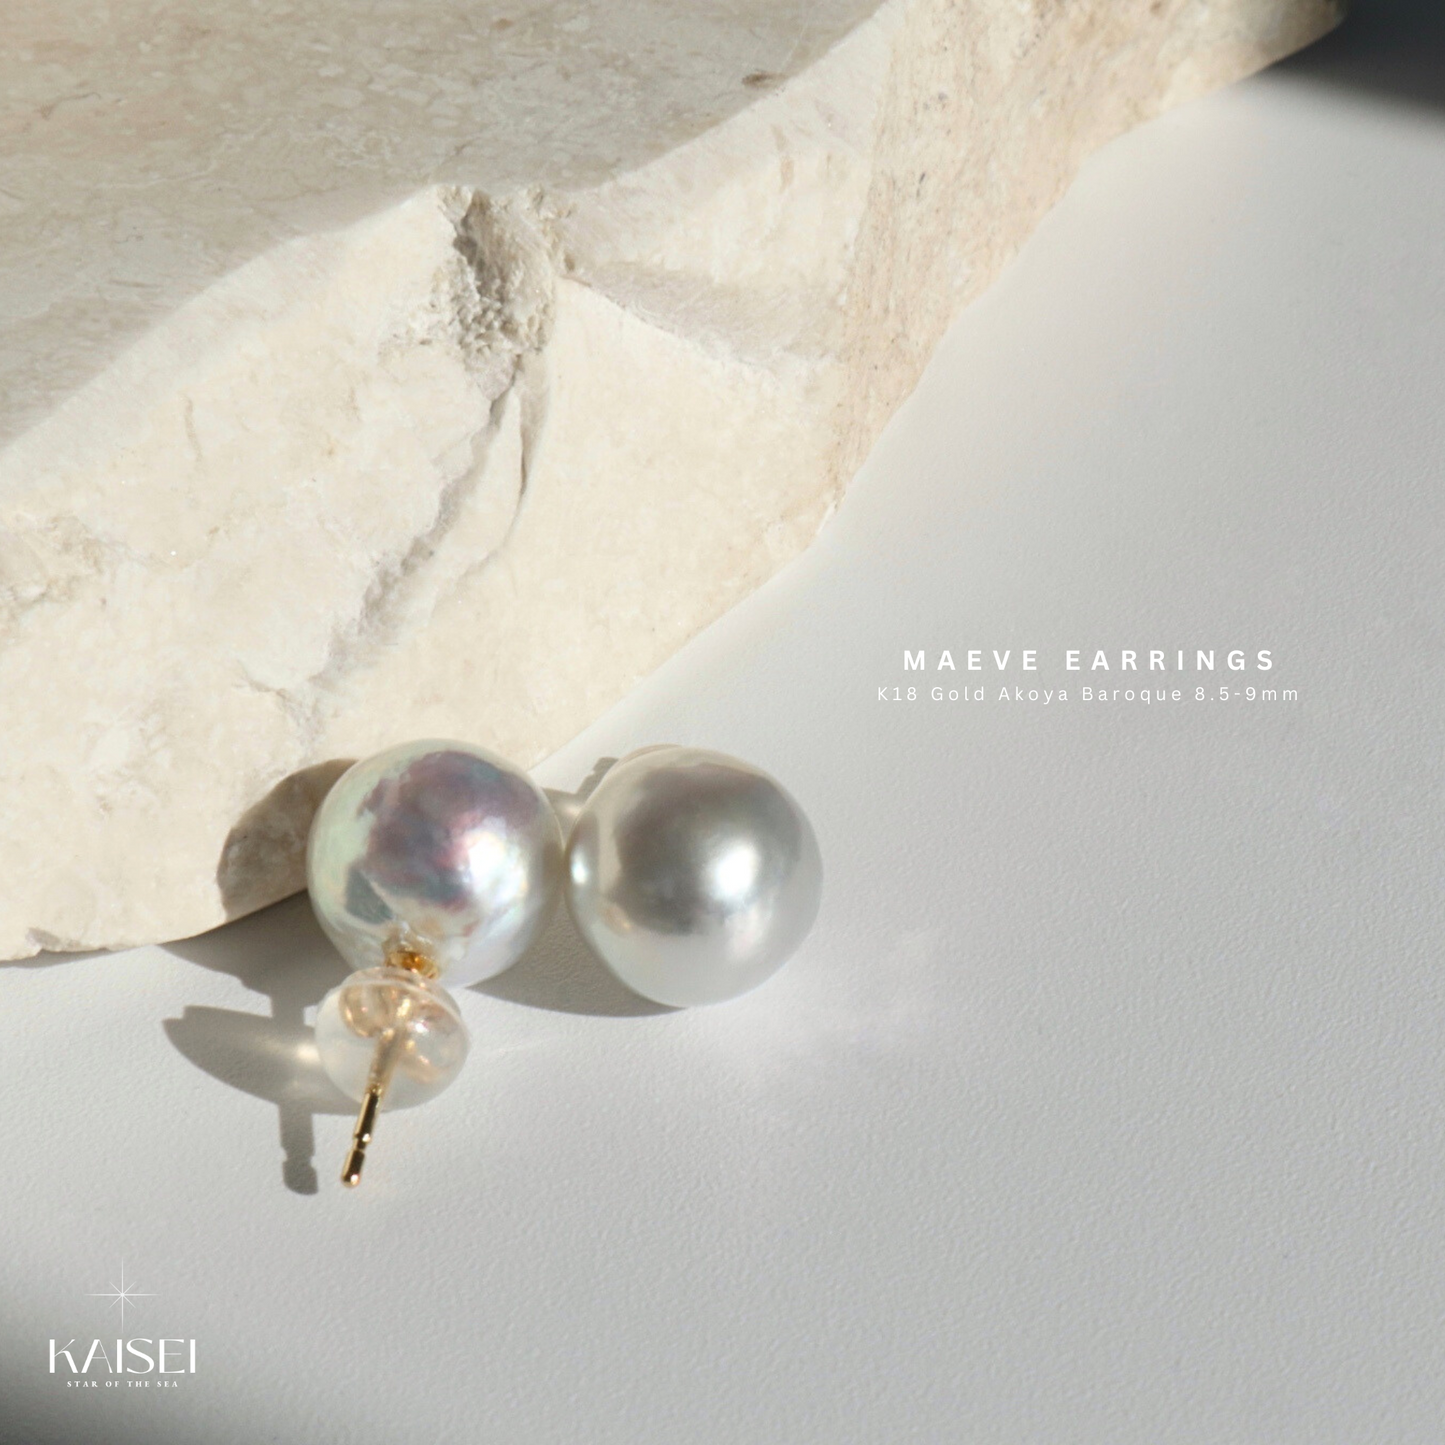 Kaisei Pearl - Maeve Earrings Natural Baroque 8.5-9mm Akoya K18 Gold Stud Earrings